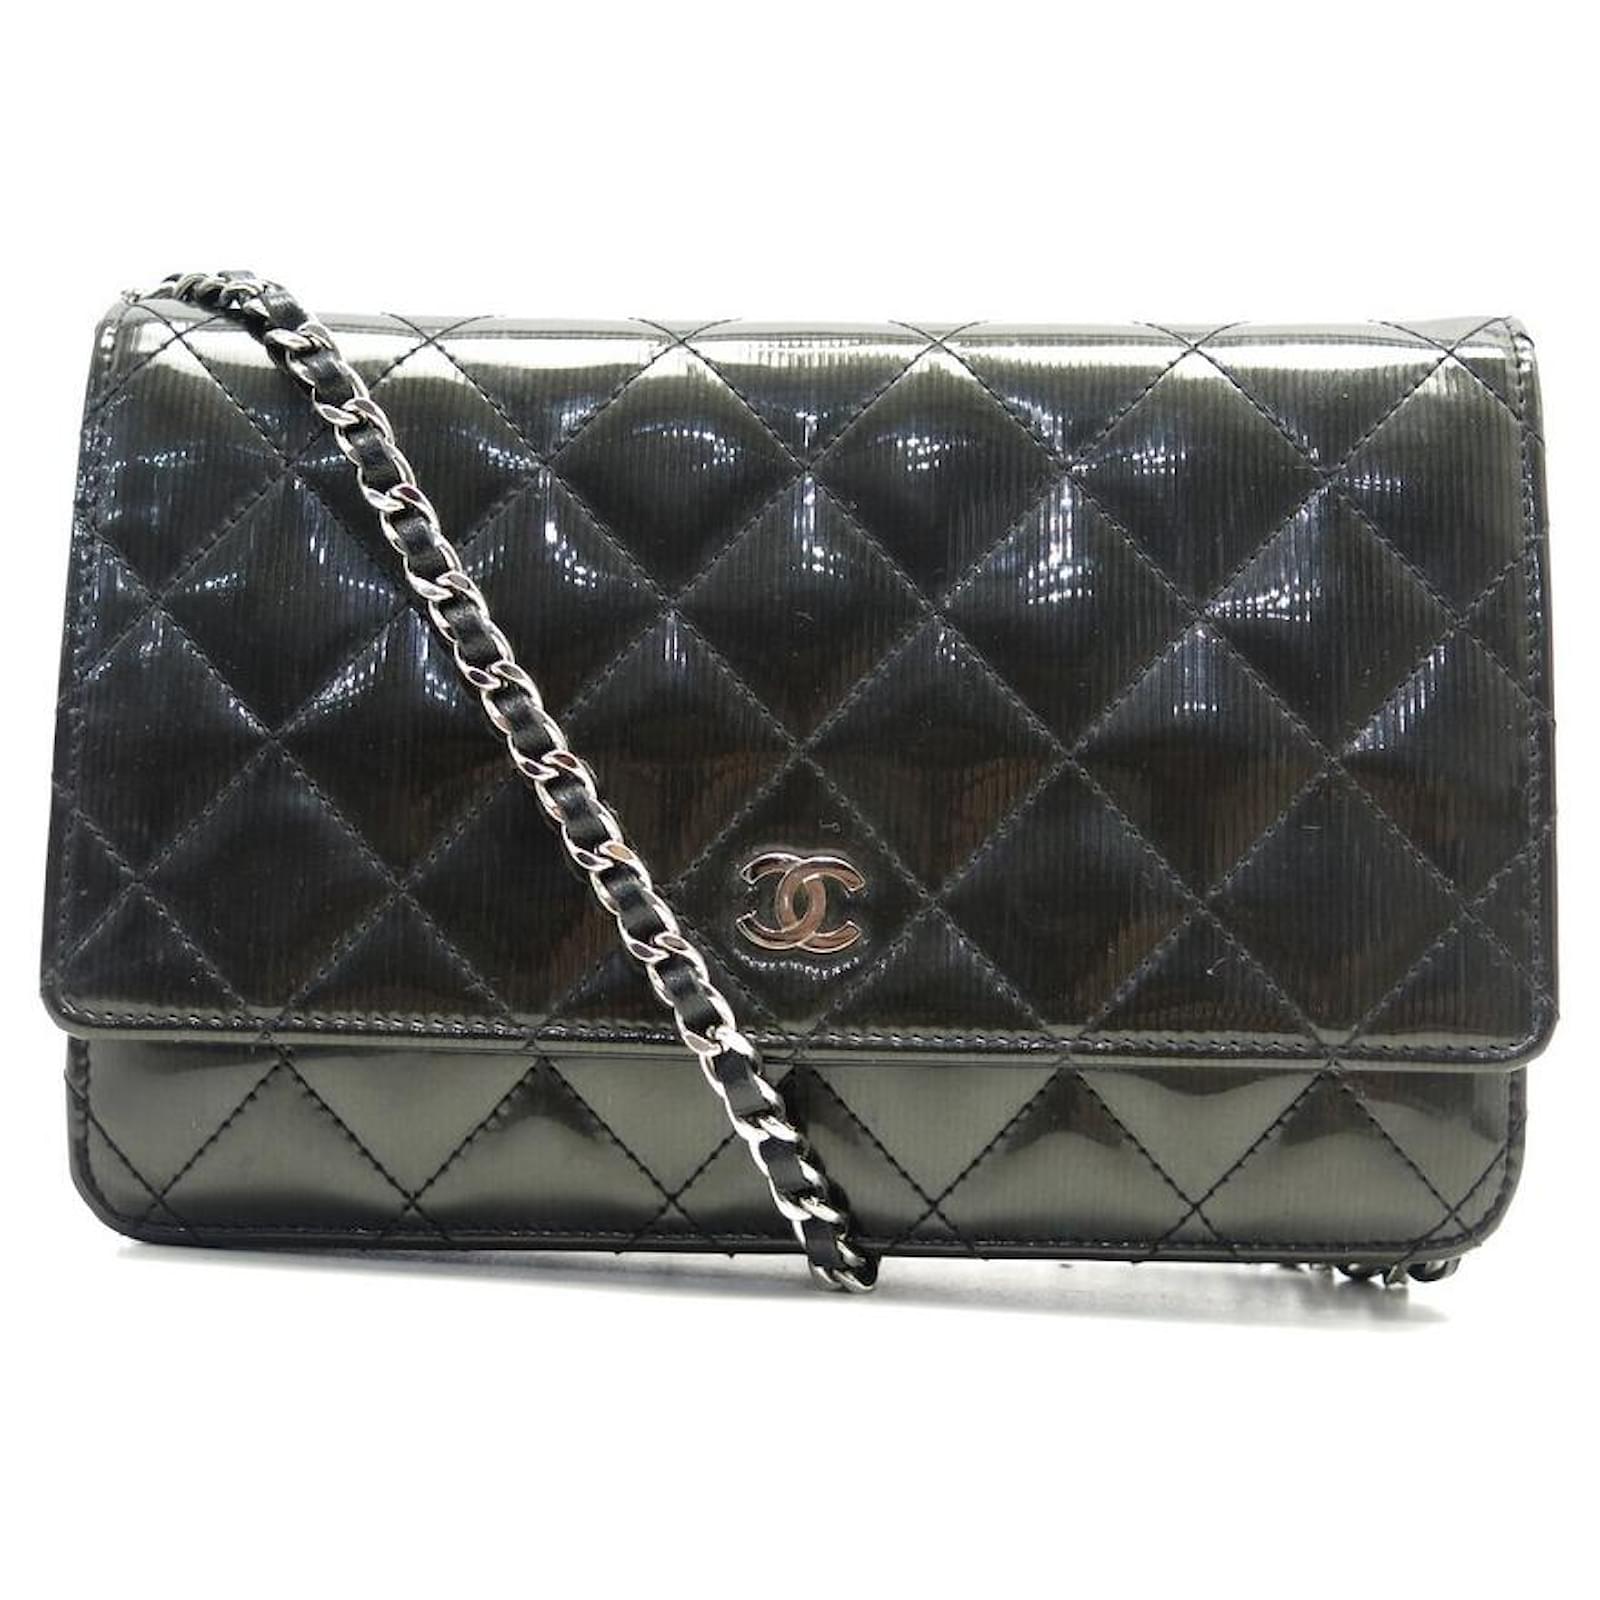 Clutch Bags Chanel Chanel Wallet on Chain AP HANDBAG0250 Leather Shoulder Woc Hand Bag